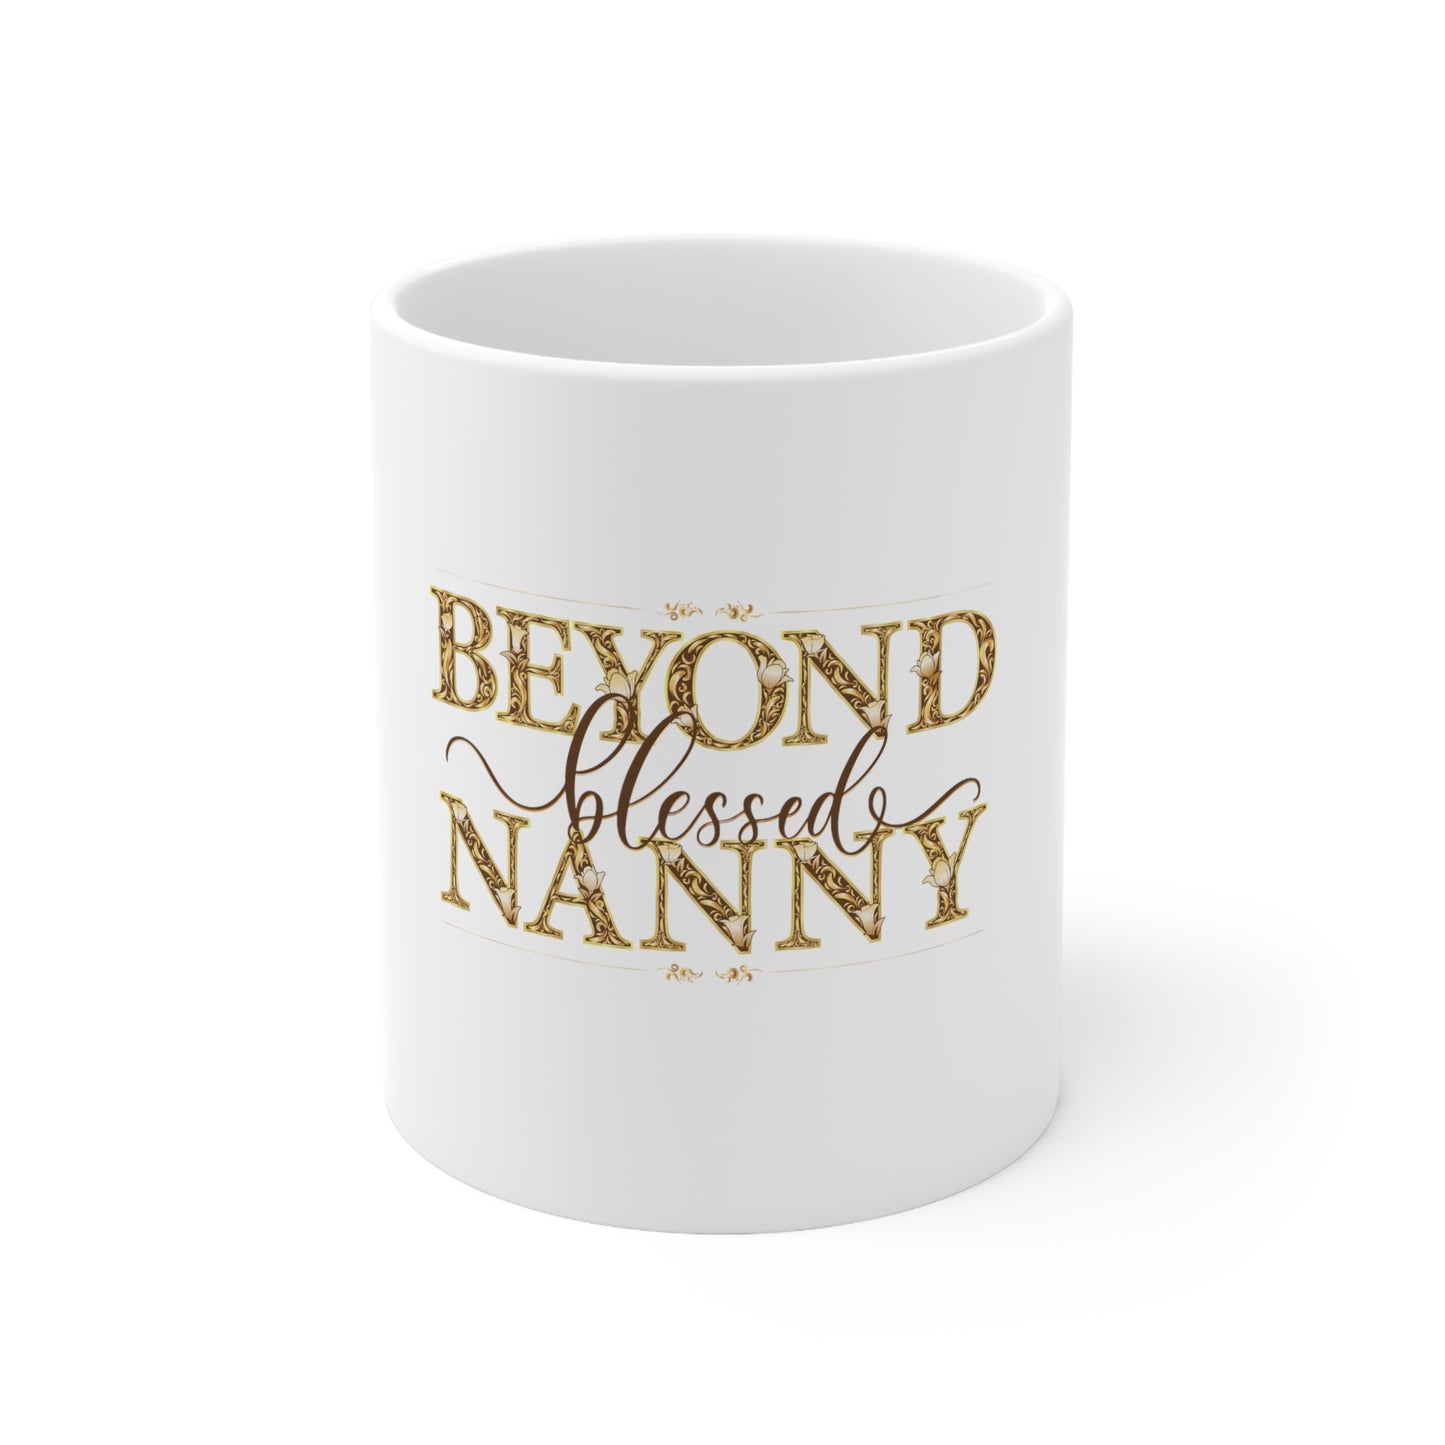 Beyond Blessed Nanny - Brown - Ceramic Mug 11oz